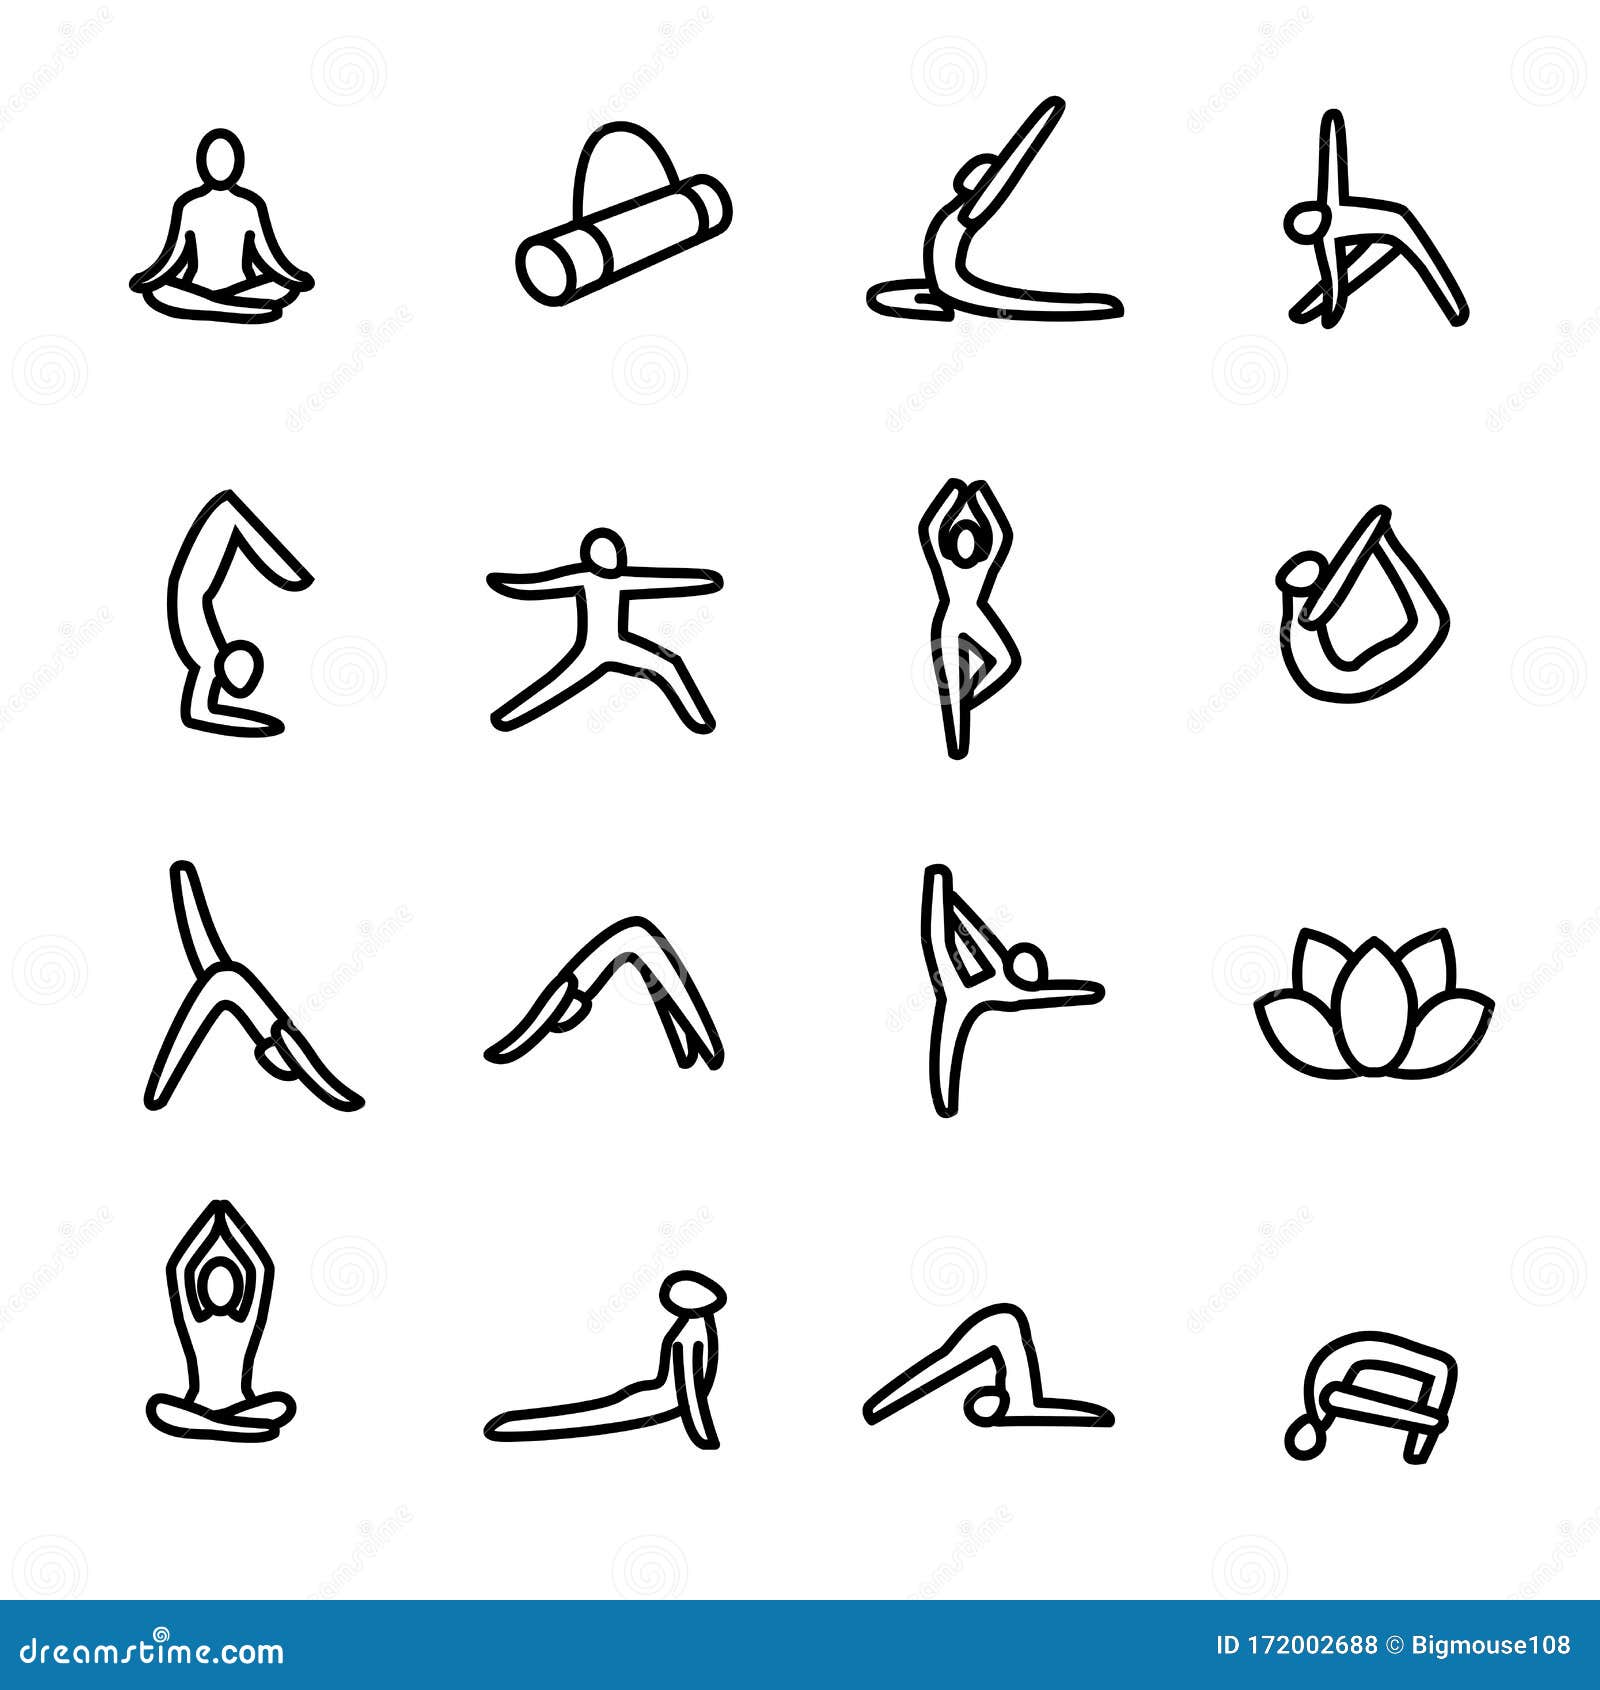 Meditation Practice Yoga Sign Black Thin Line Icon Set. Vector Stock ...